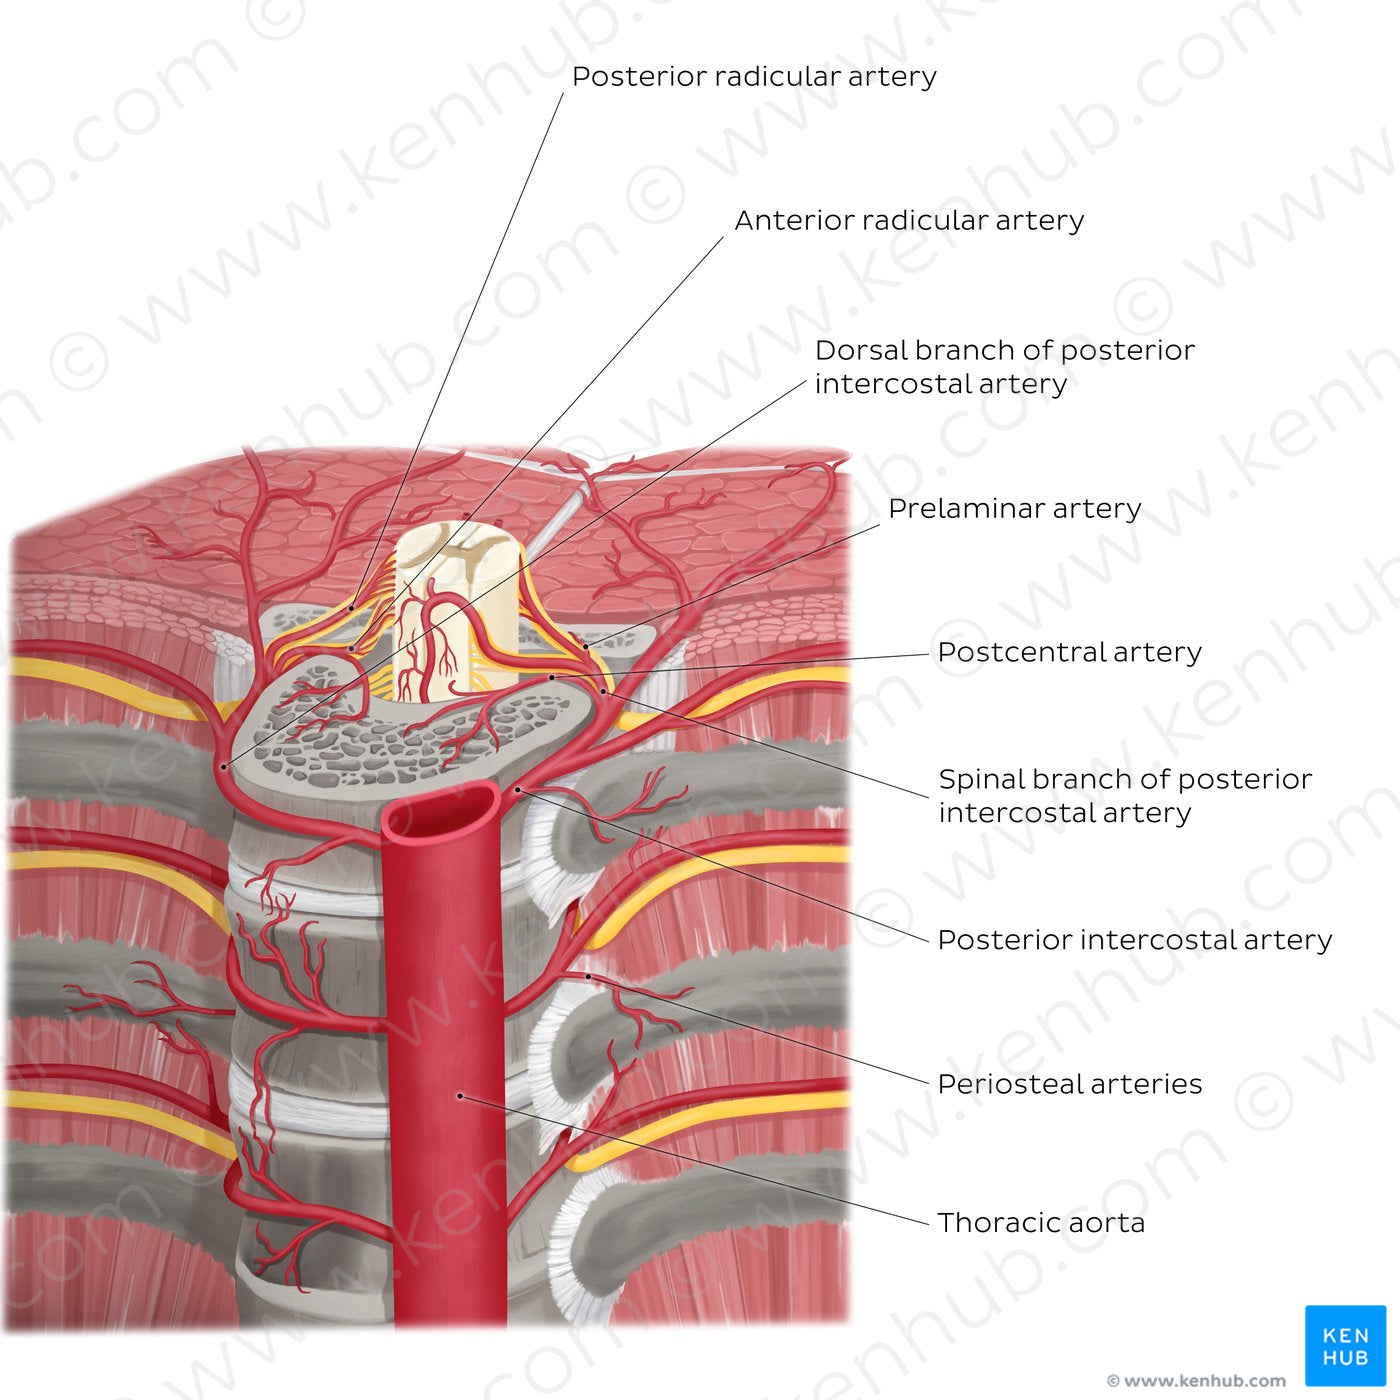 Arteries of the vertebral column (English)